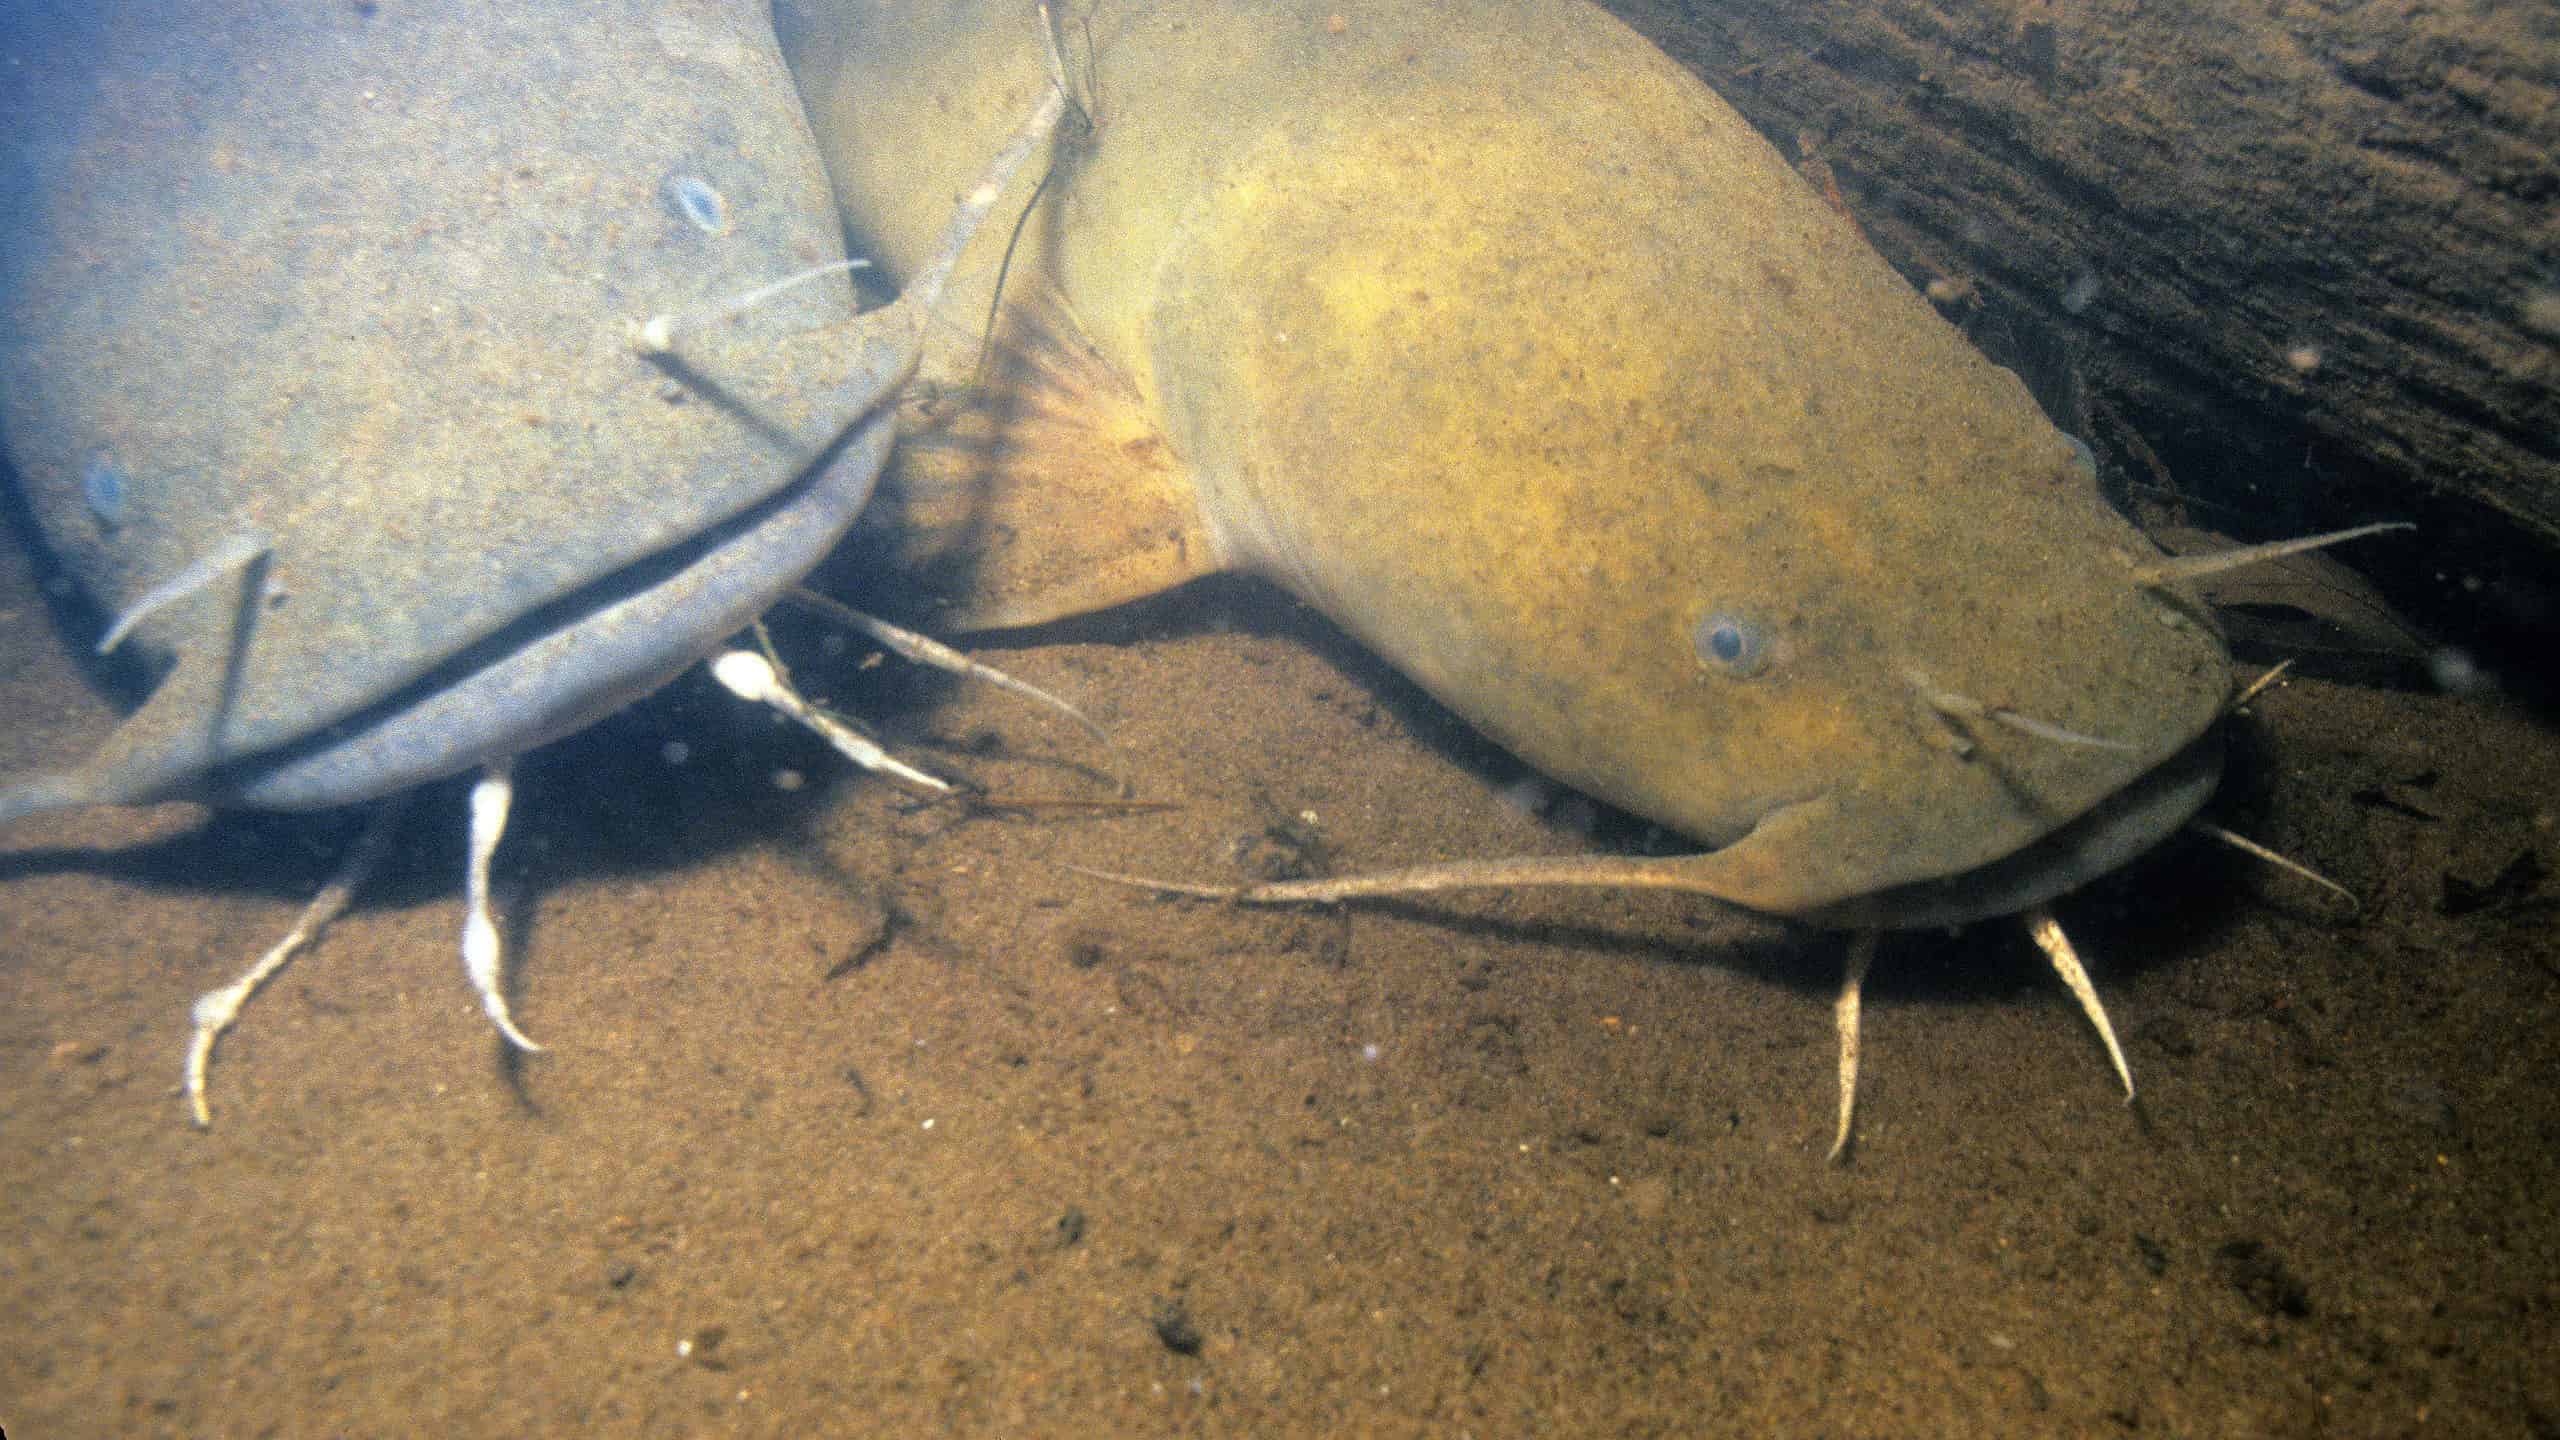 Two flathead catfish on bottom of the river floor.